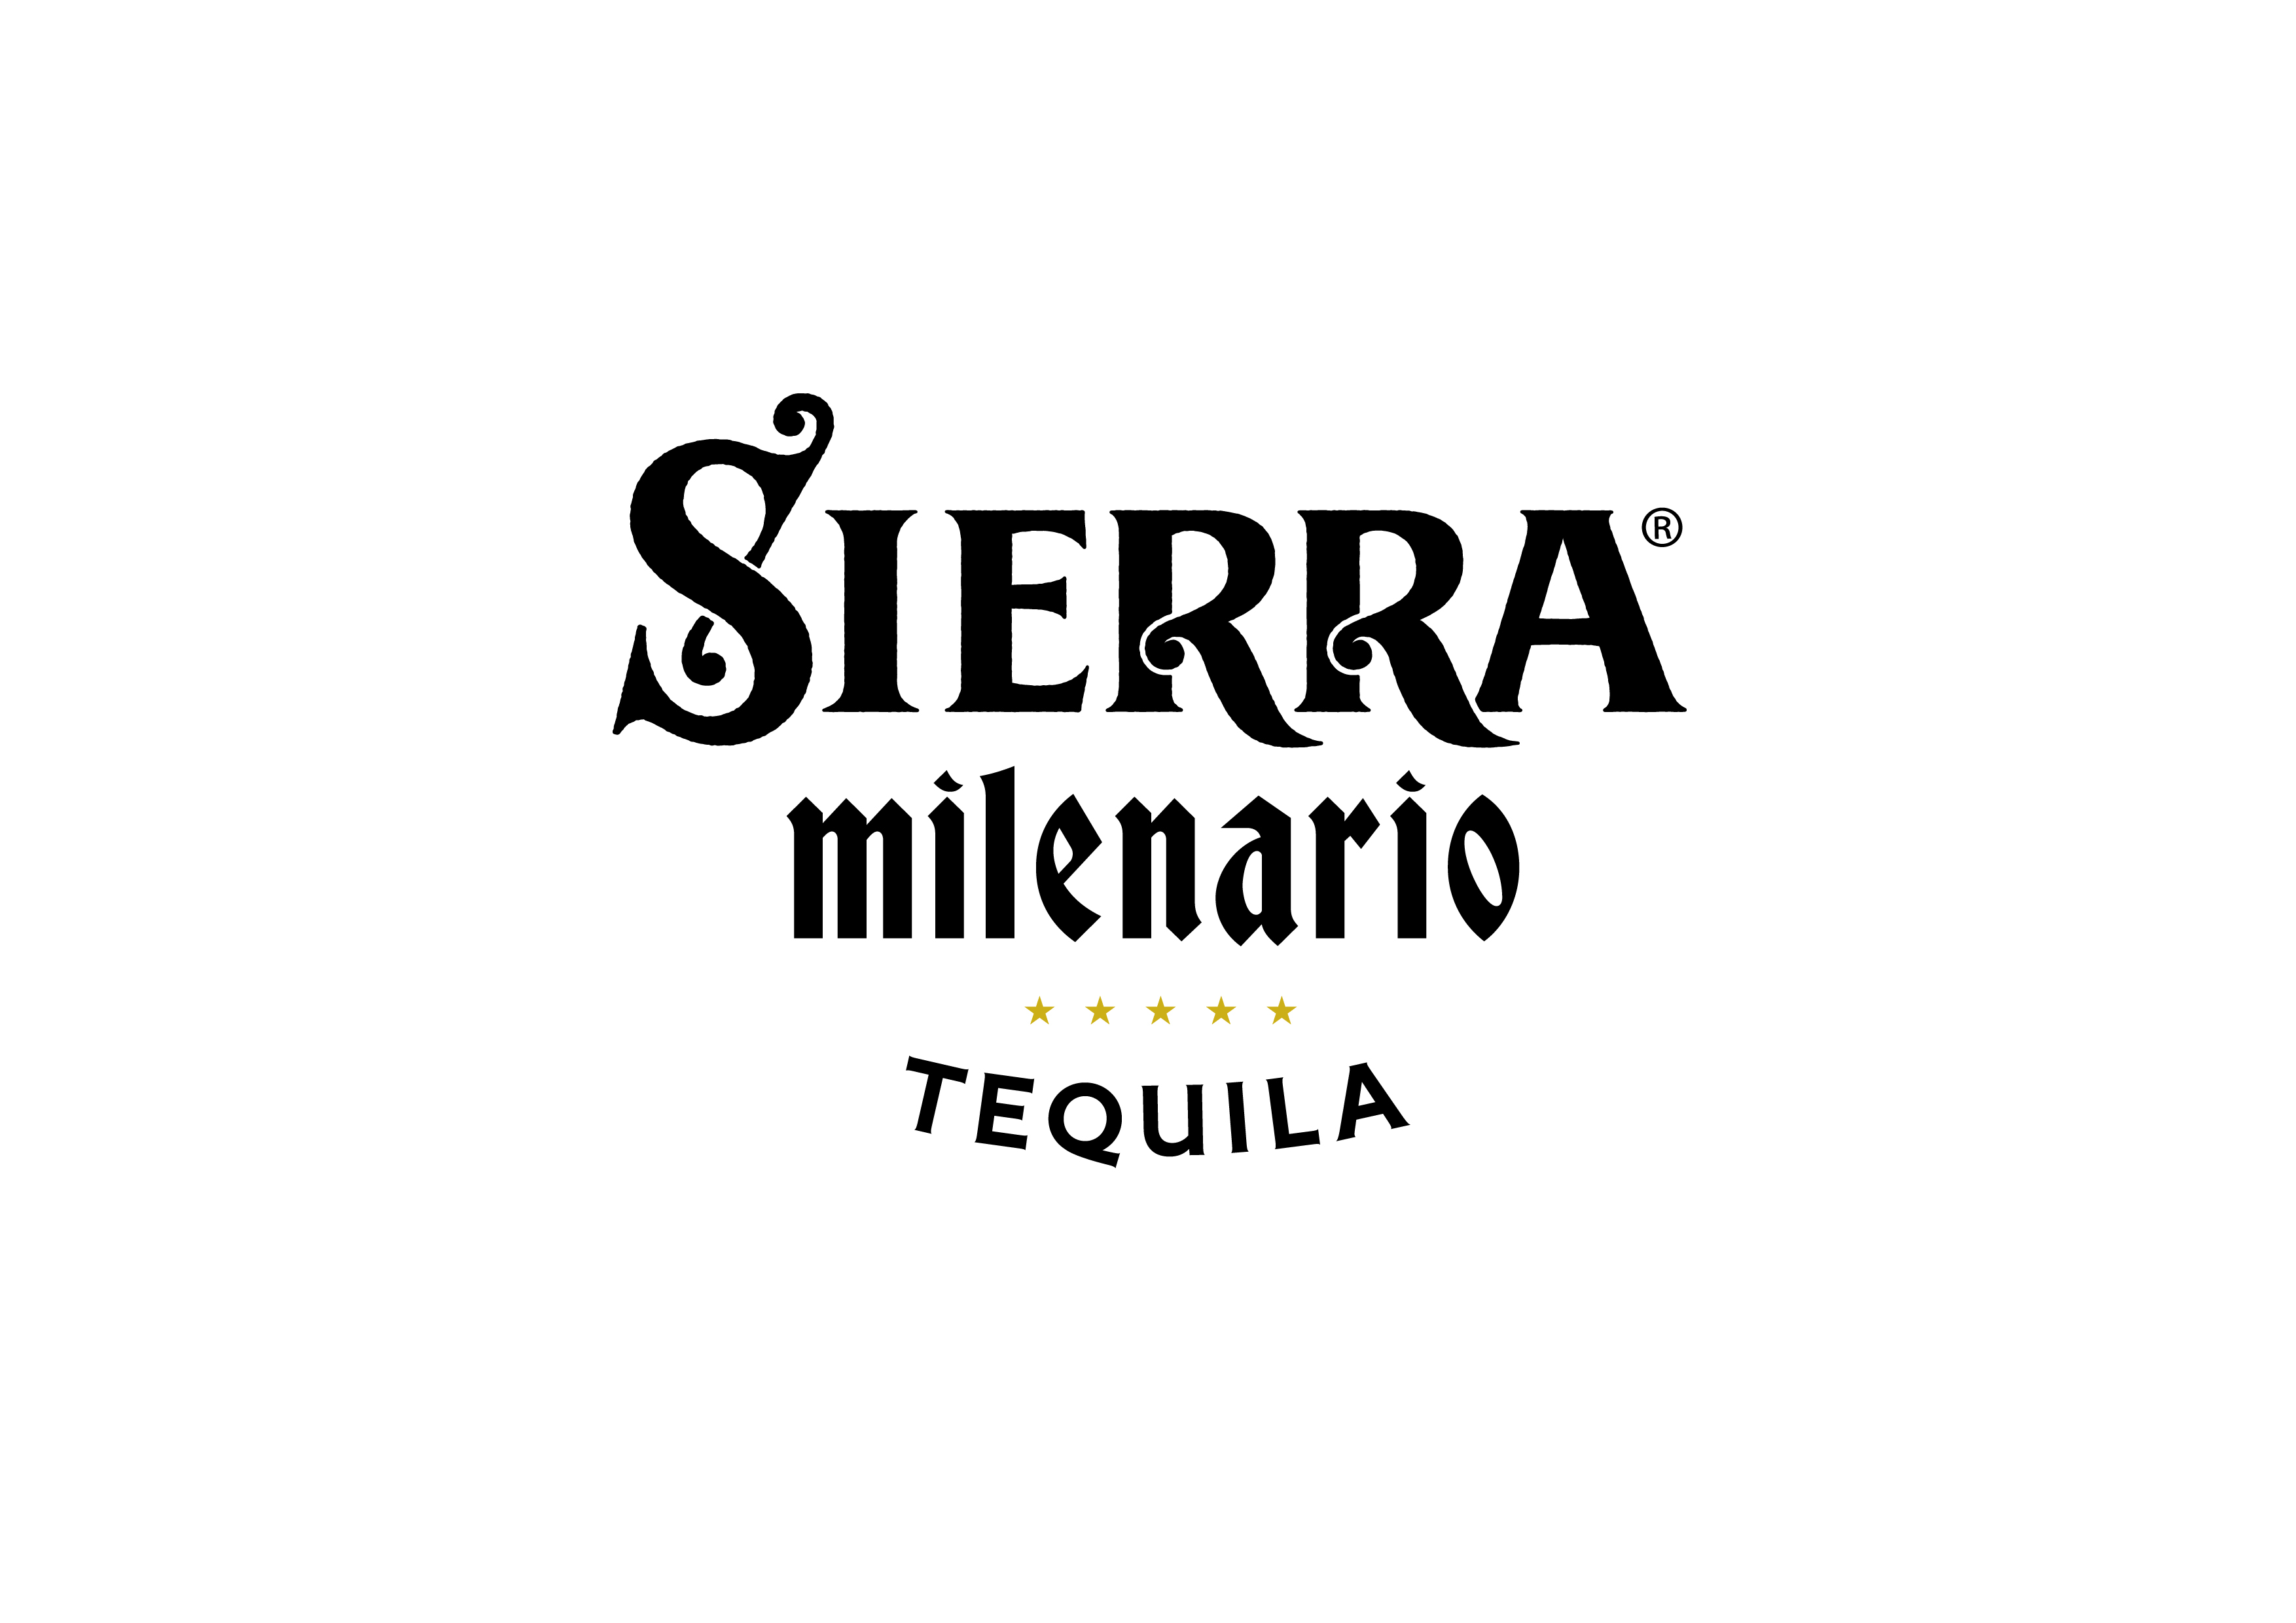 SIERRA-Milenario_Brand-Documents_Logo_bw